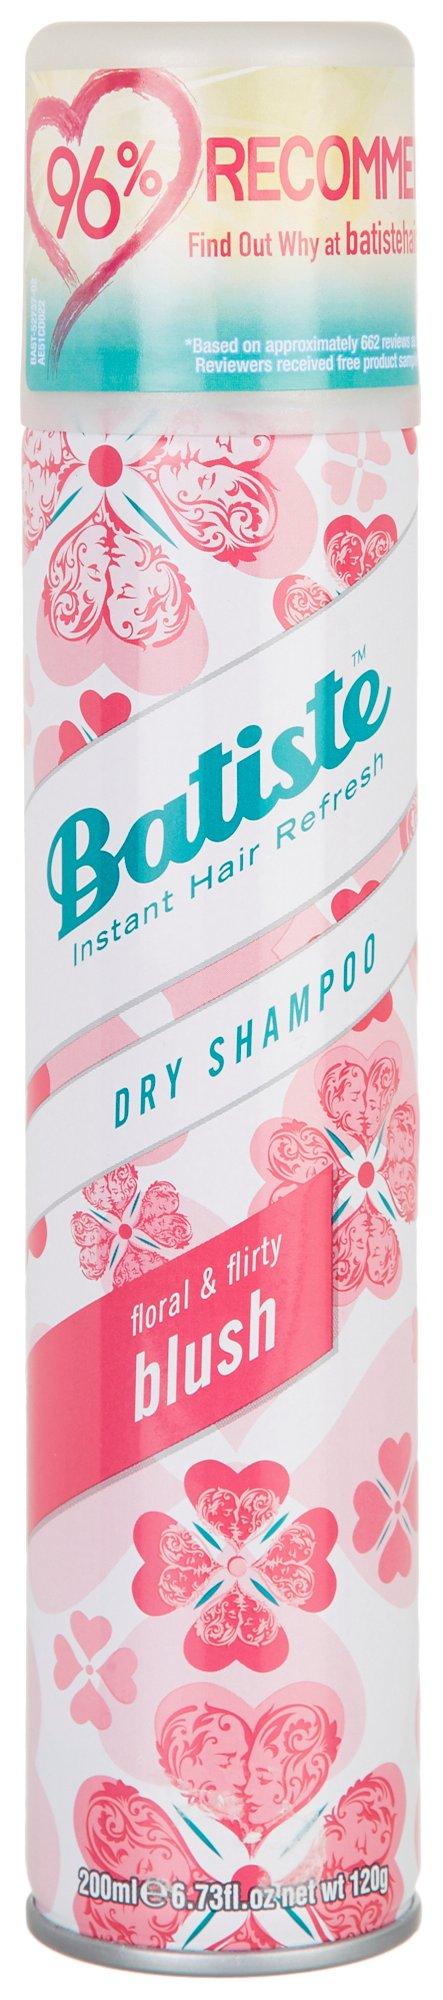 Batiste Floral Flirty Blush Dry Shampoo 6.7 fl